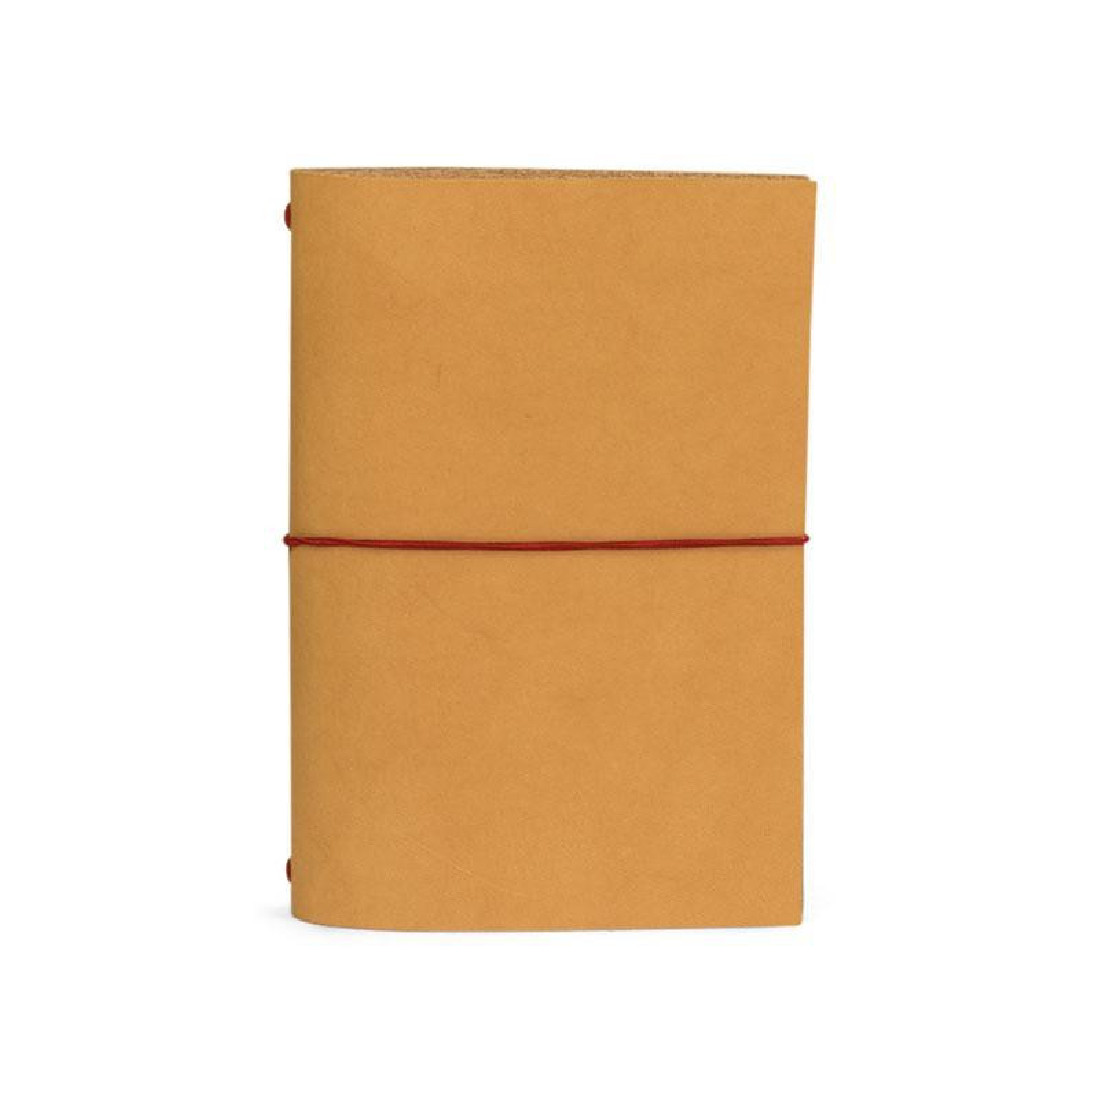 Paper Republic grand voyageur pocket sand leather journal